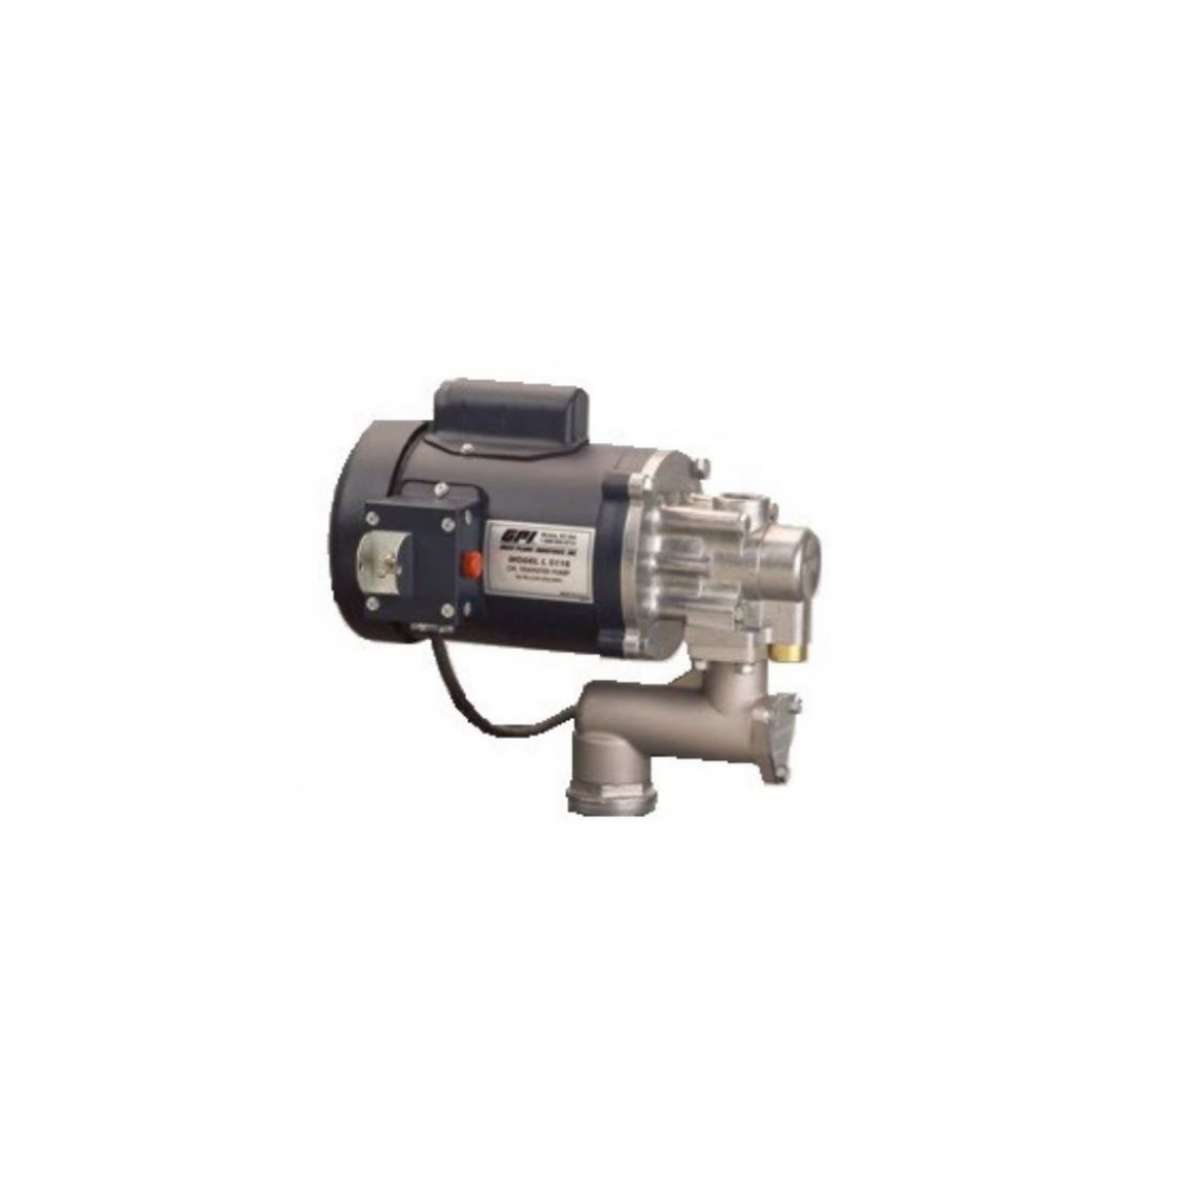 Lubrigard 120 Volt Oil Transfer Pump